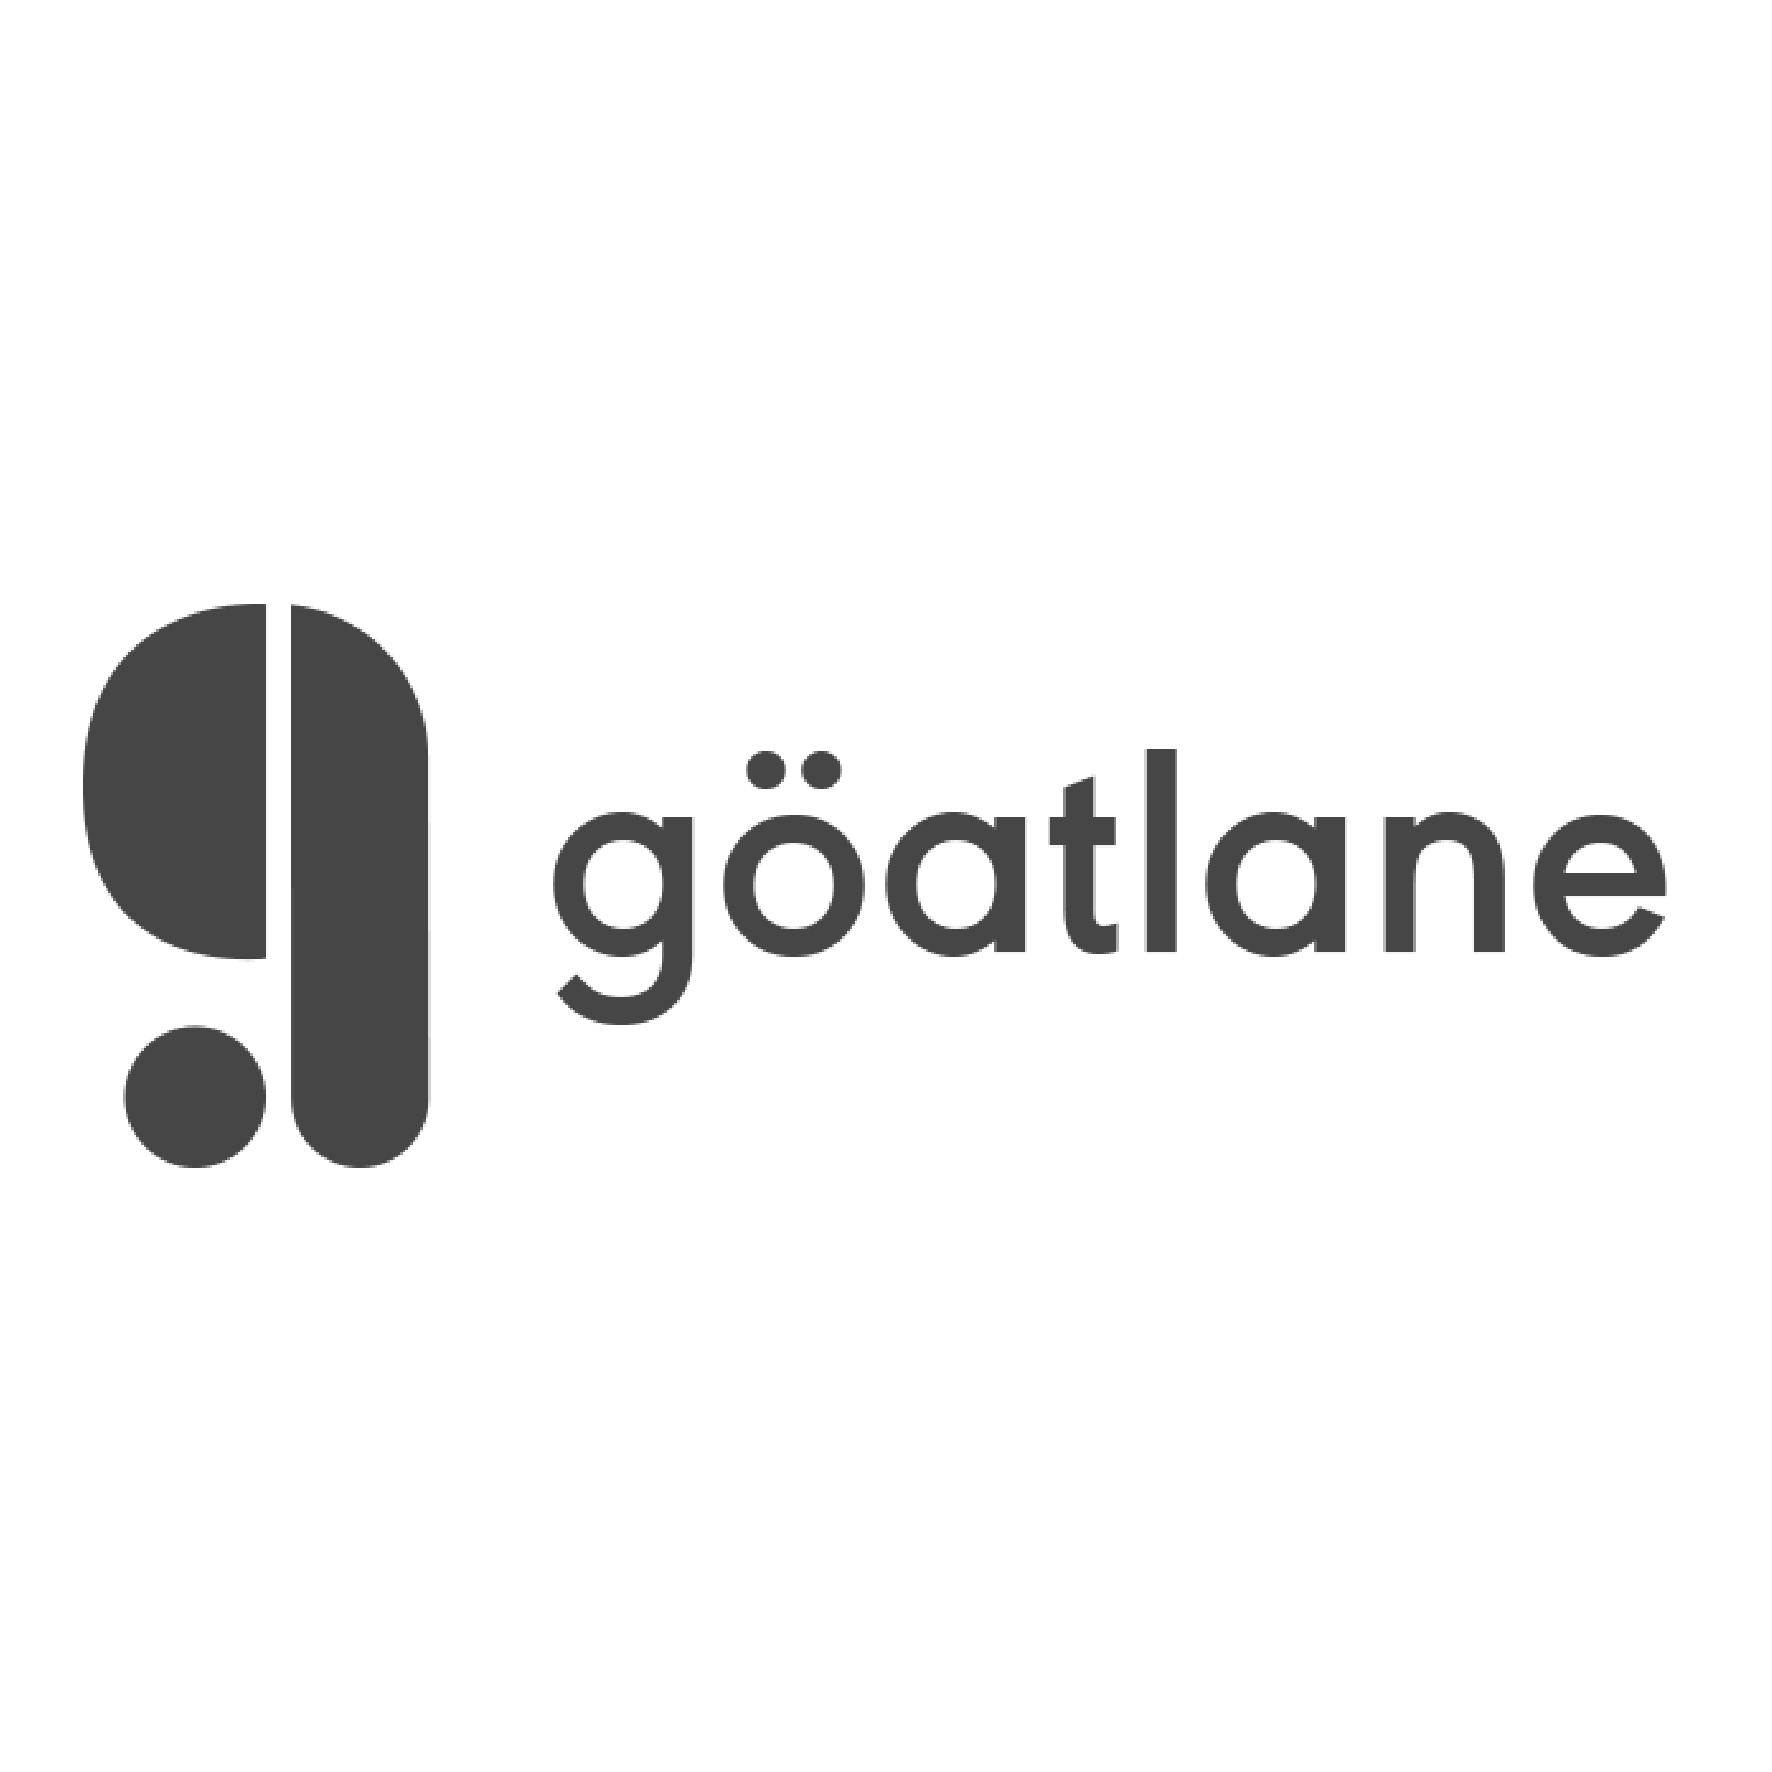 Goatlane_design_logo_greyscale_reduced size-01.png